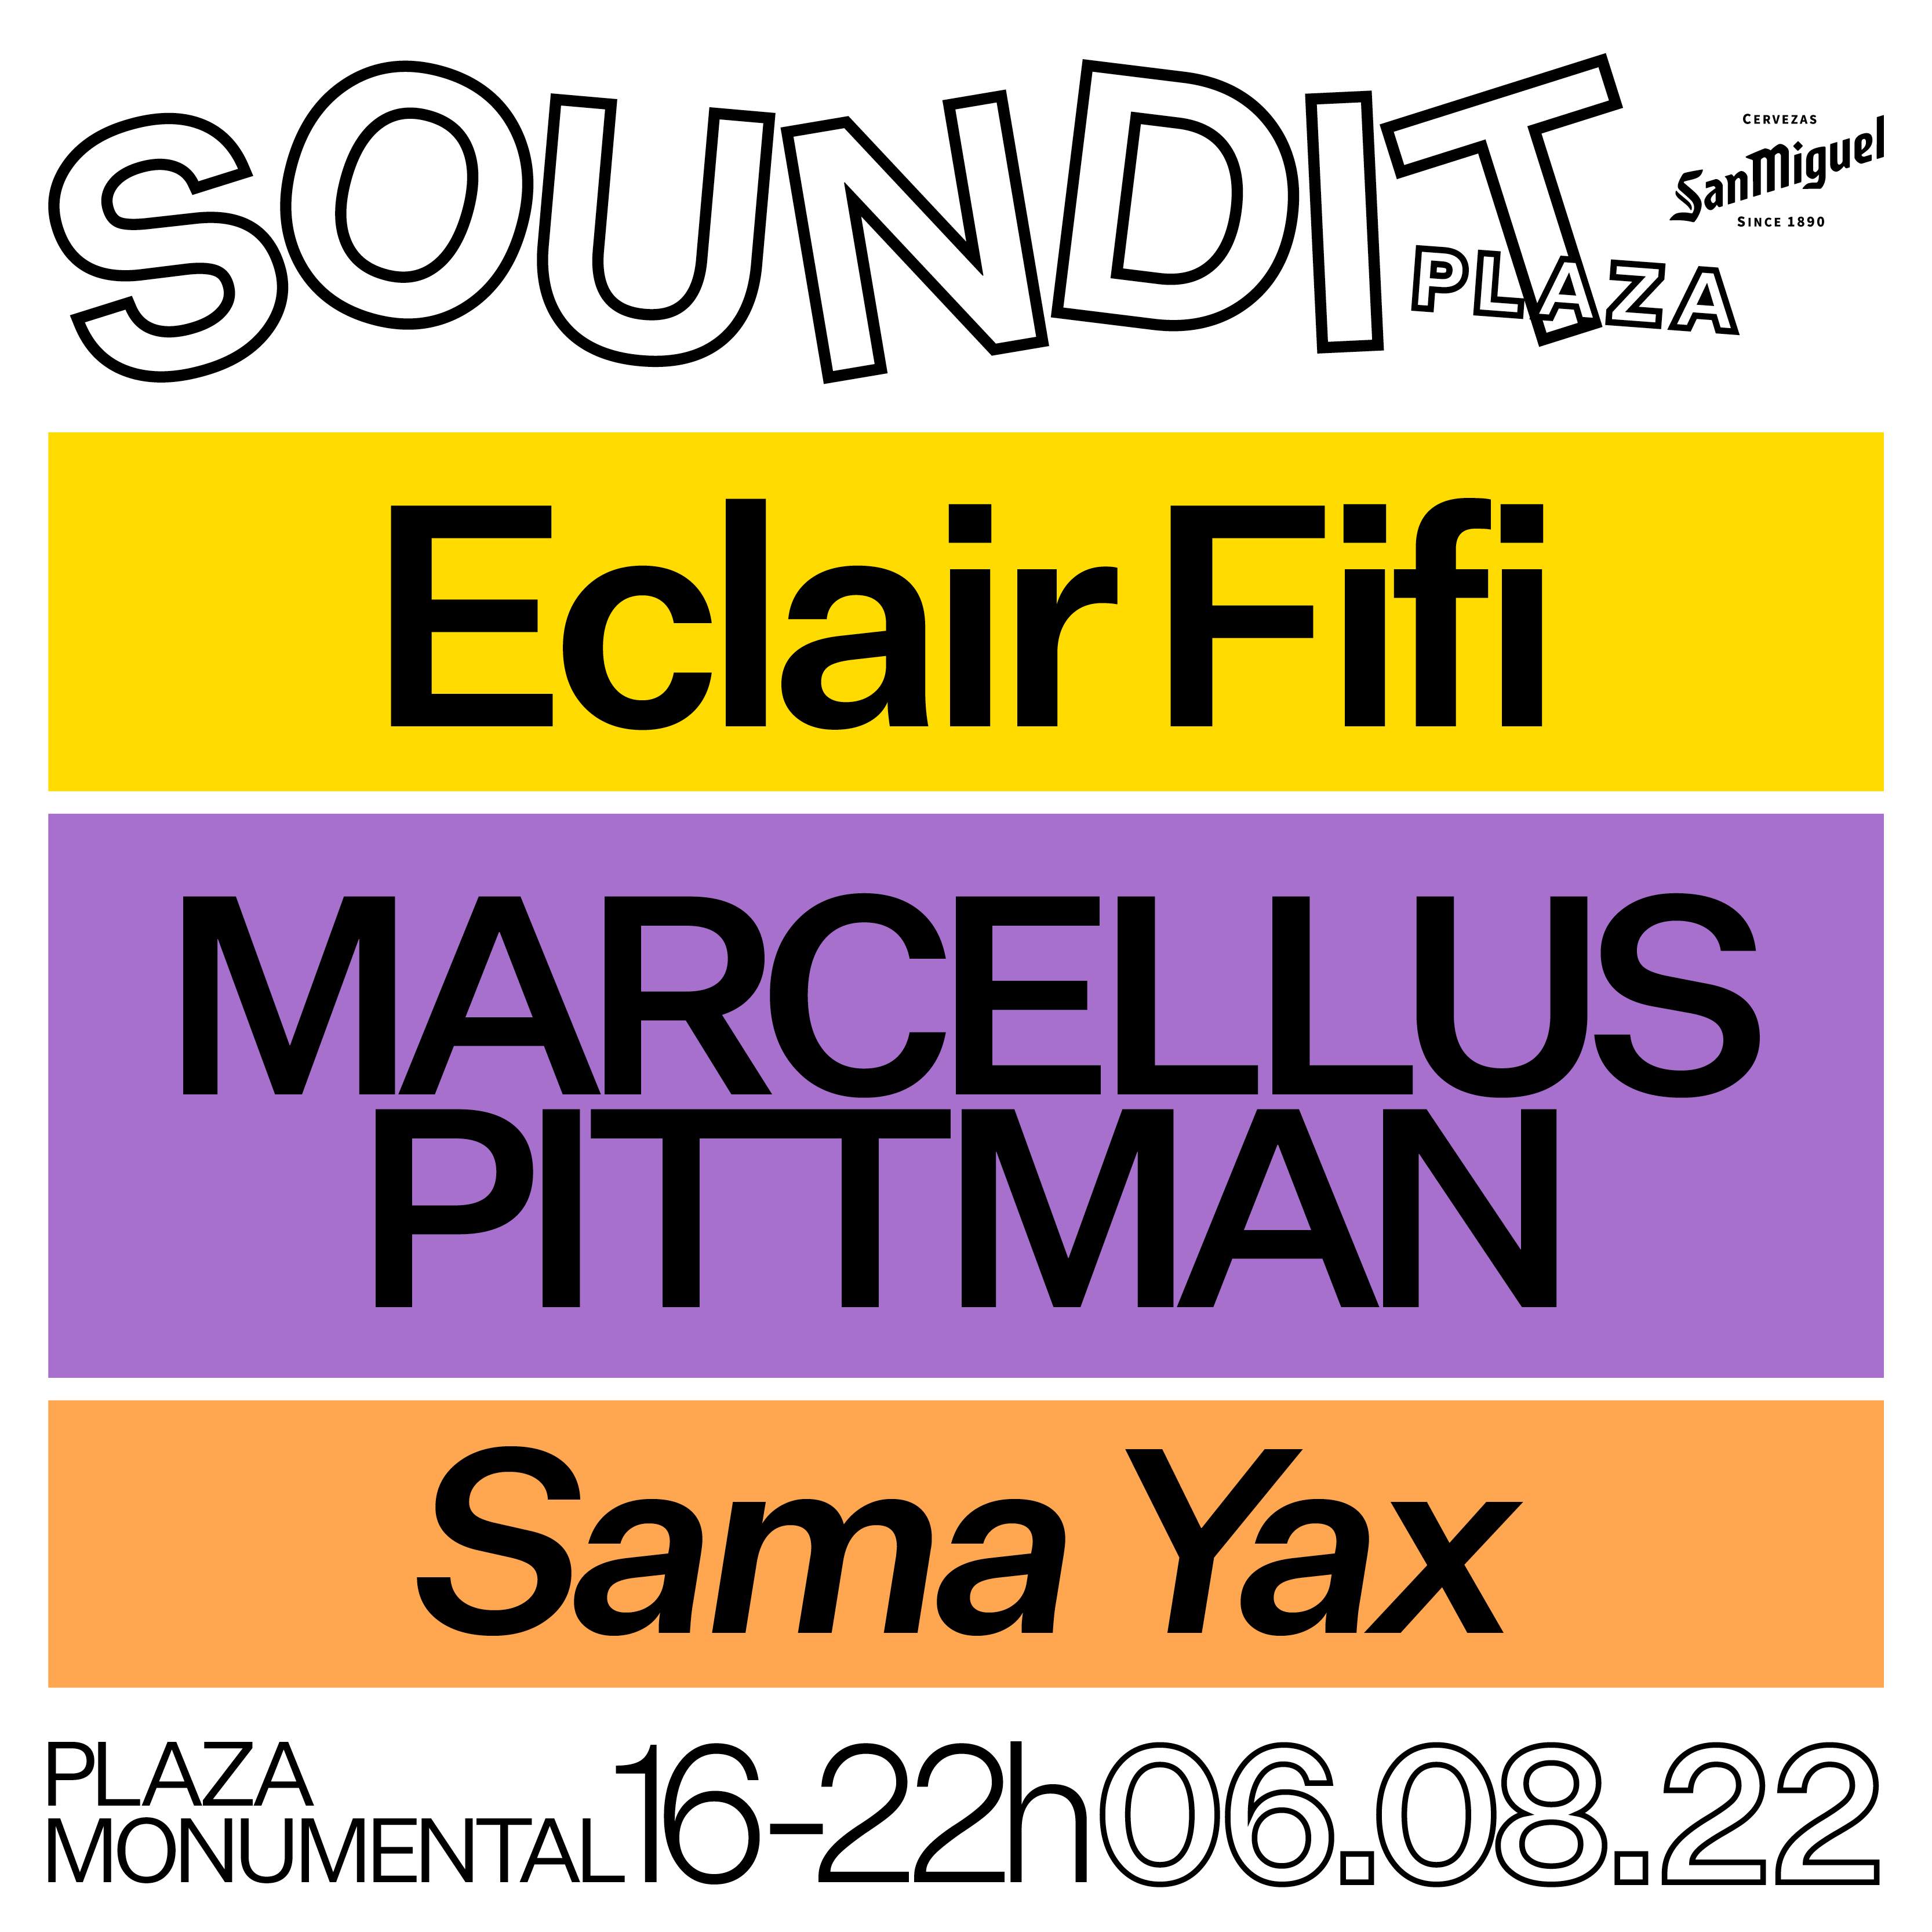 SOUNDIT Plaza: Eclair Fifi, Marcellus Pittman, Sama Yax - Página trasera